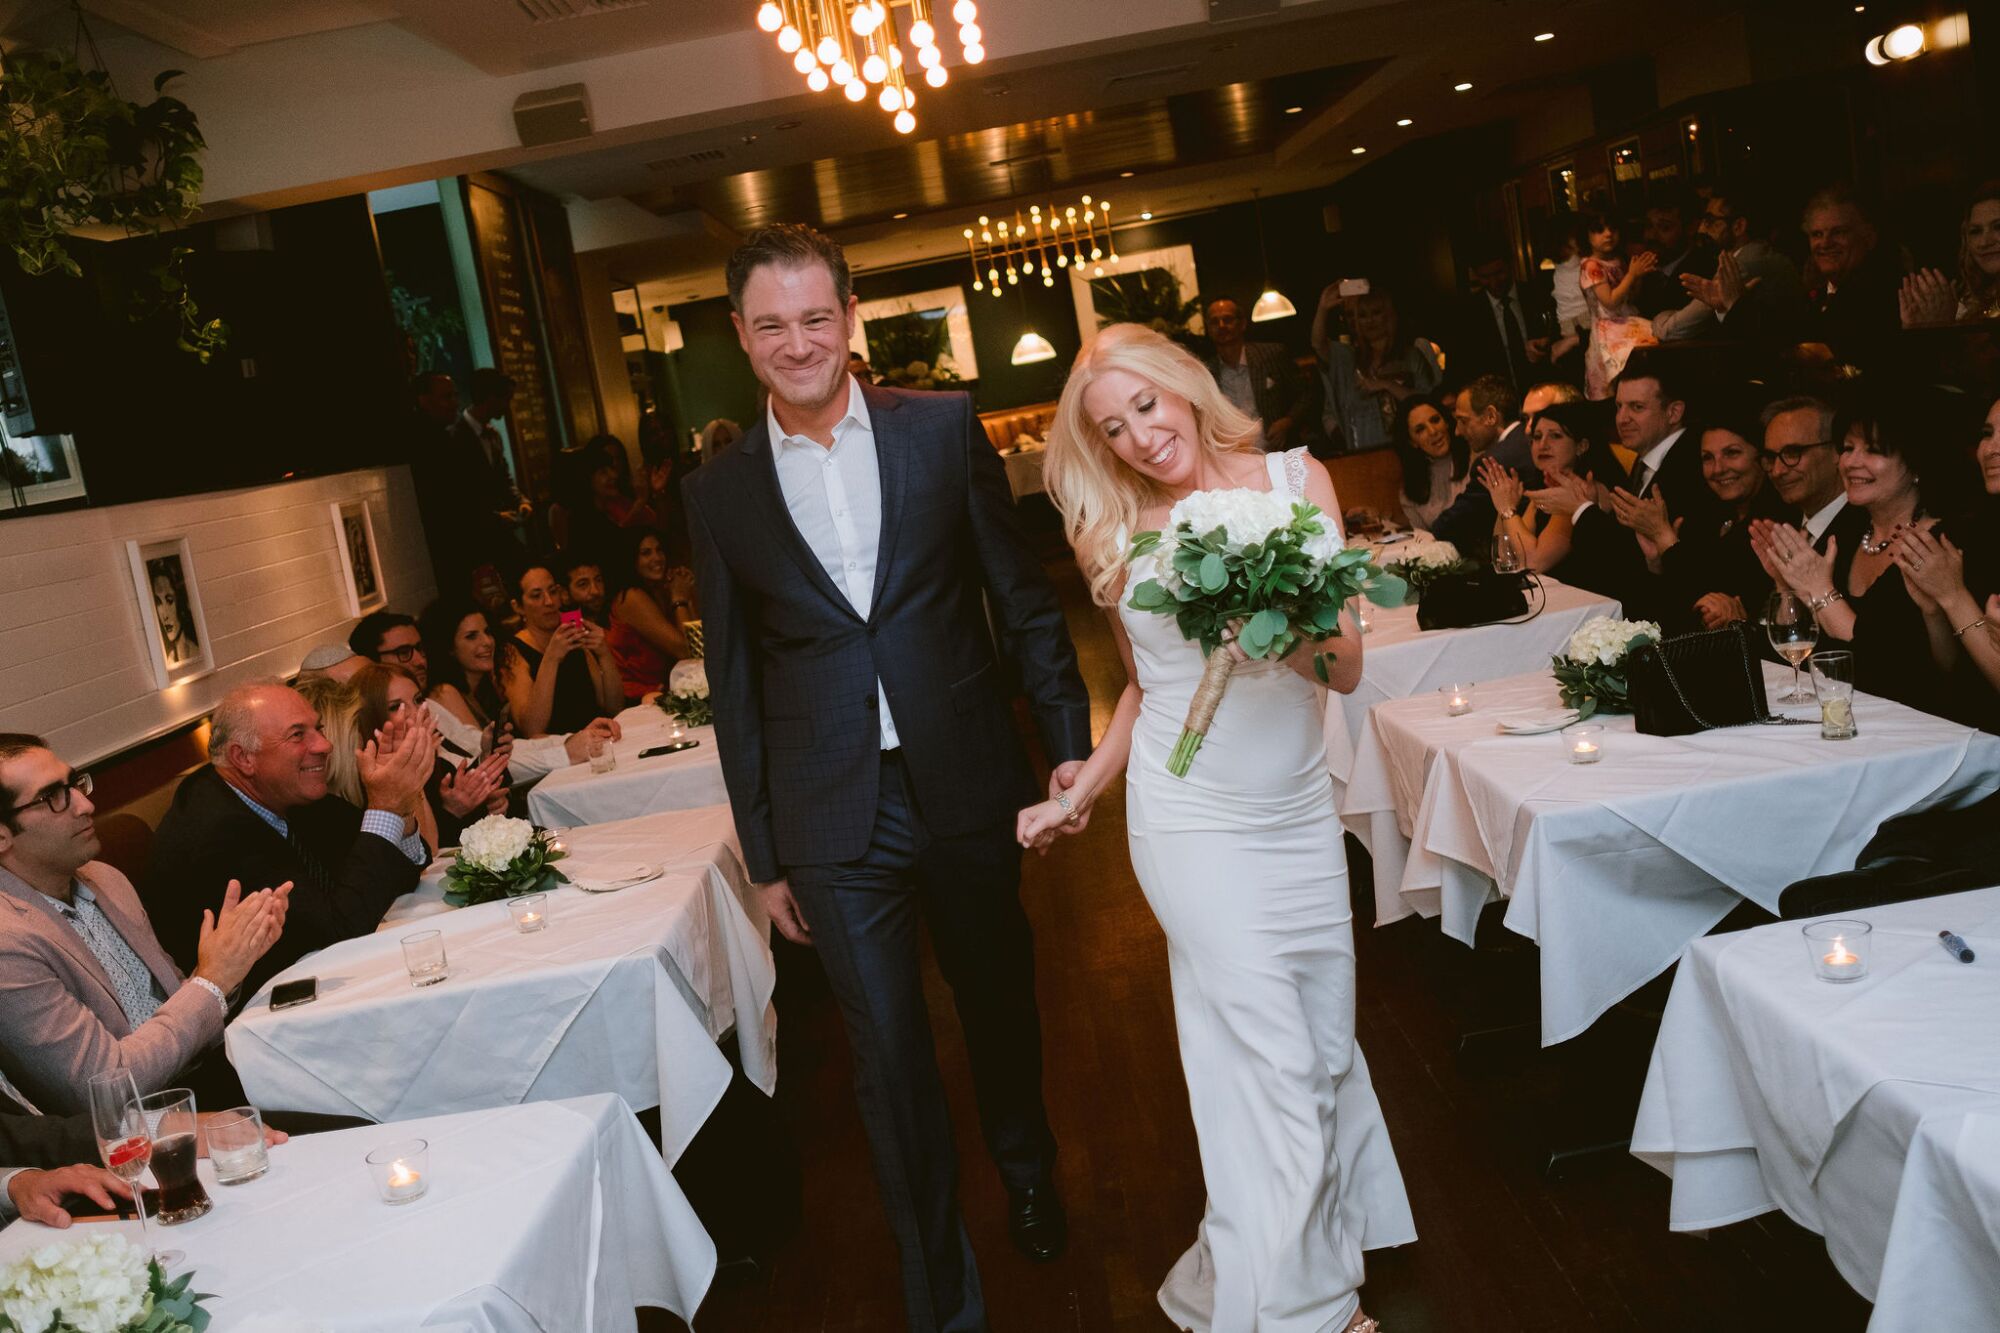 Jonah Keri and Amy Kaufman walk between an aisle of table on their wedding day